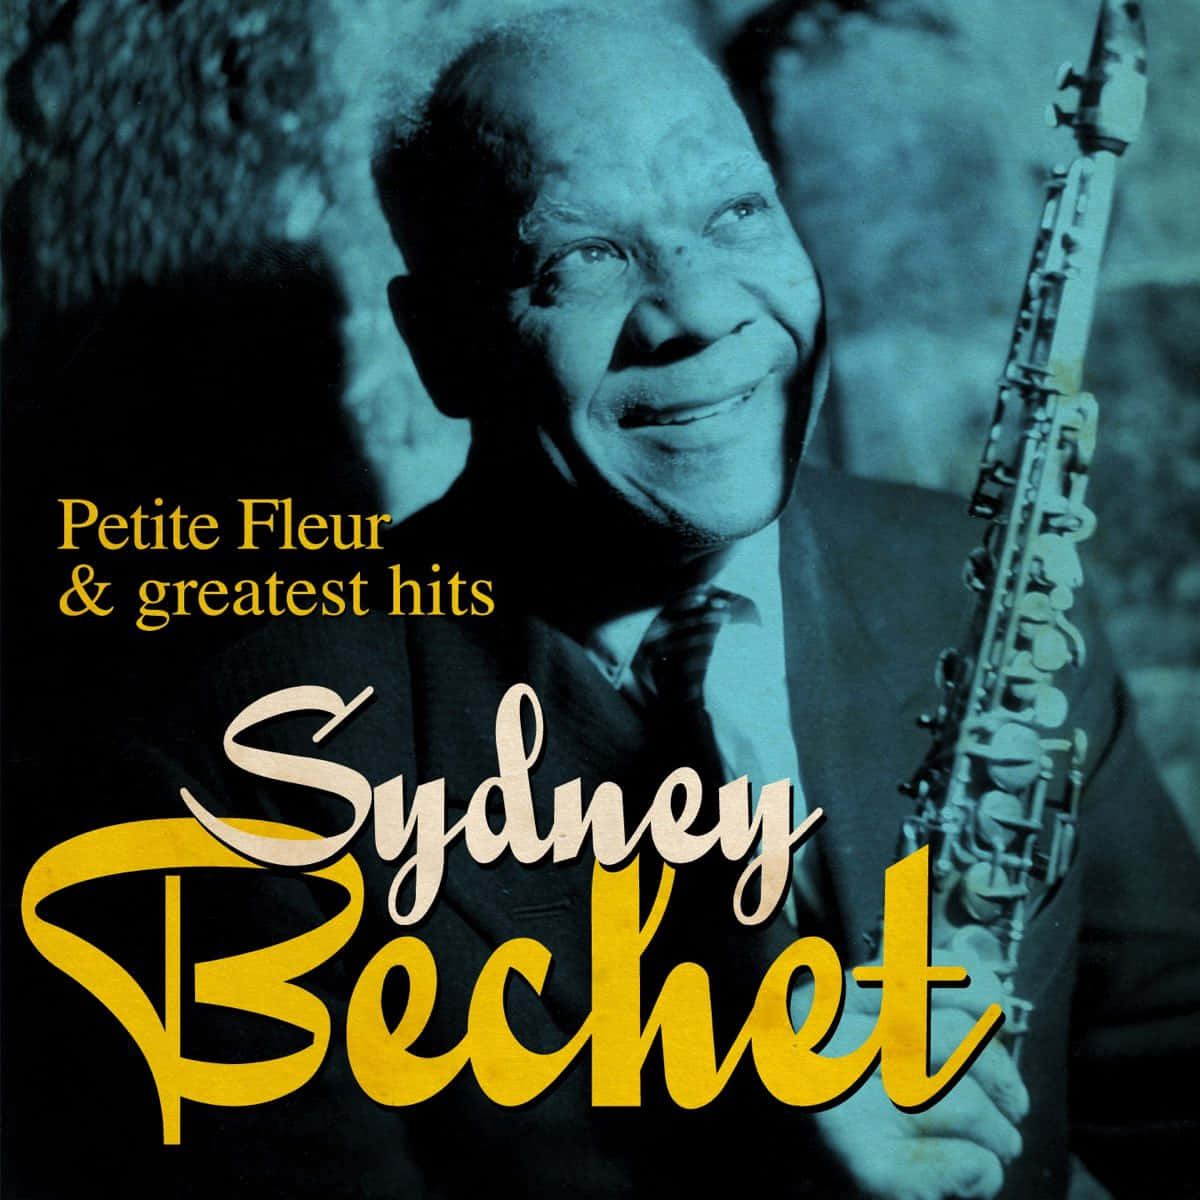 Legendary Jazz Musician Sidney Brechet Wallpaper